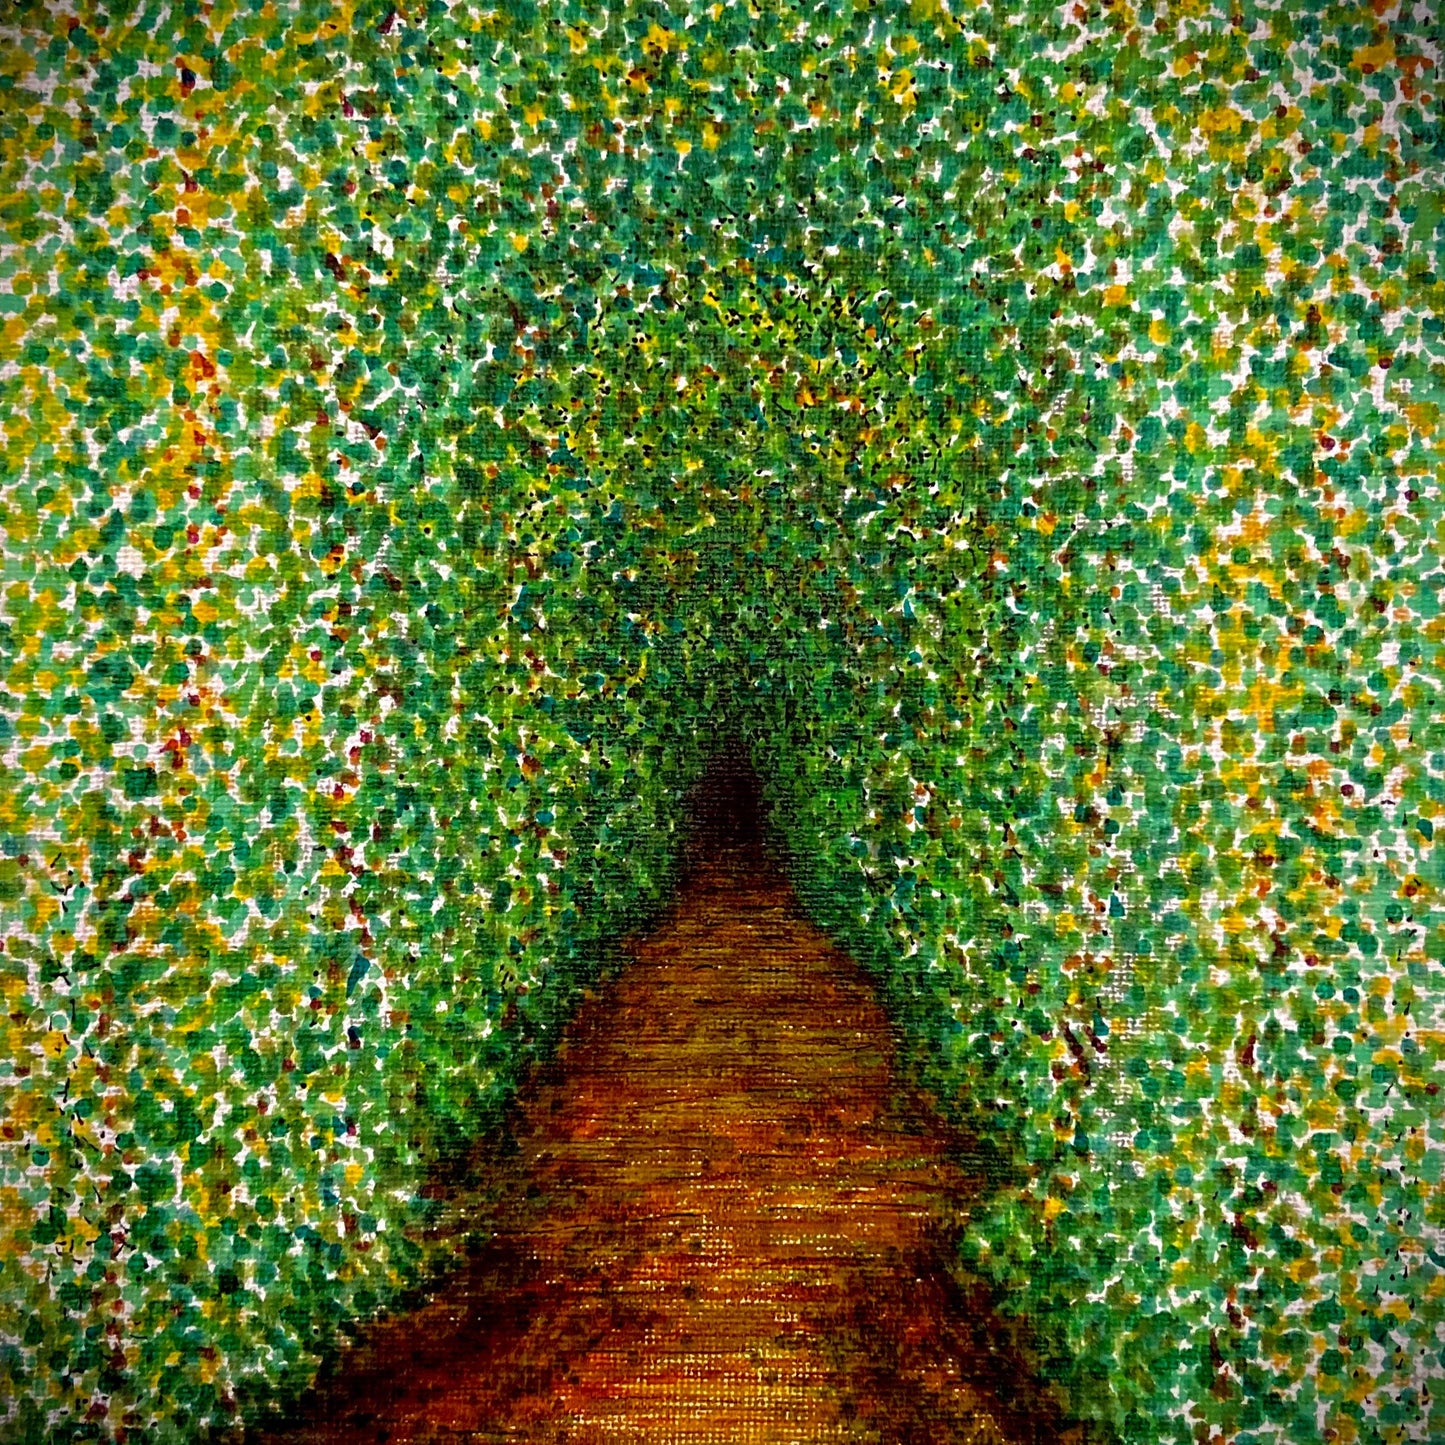 "Hidden Path" by R3 (Russ R. Robinson)